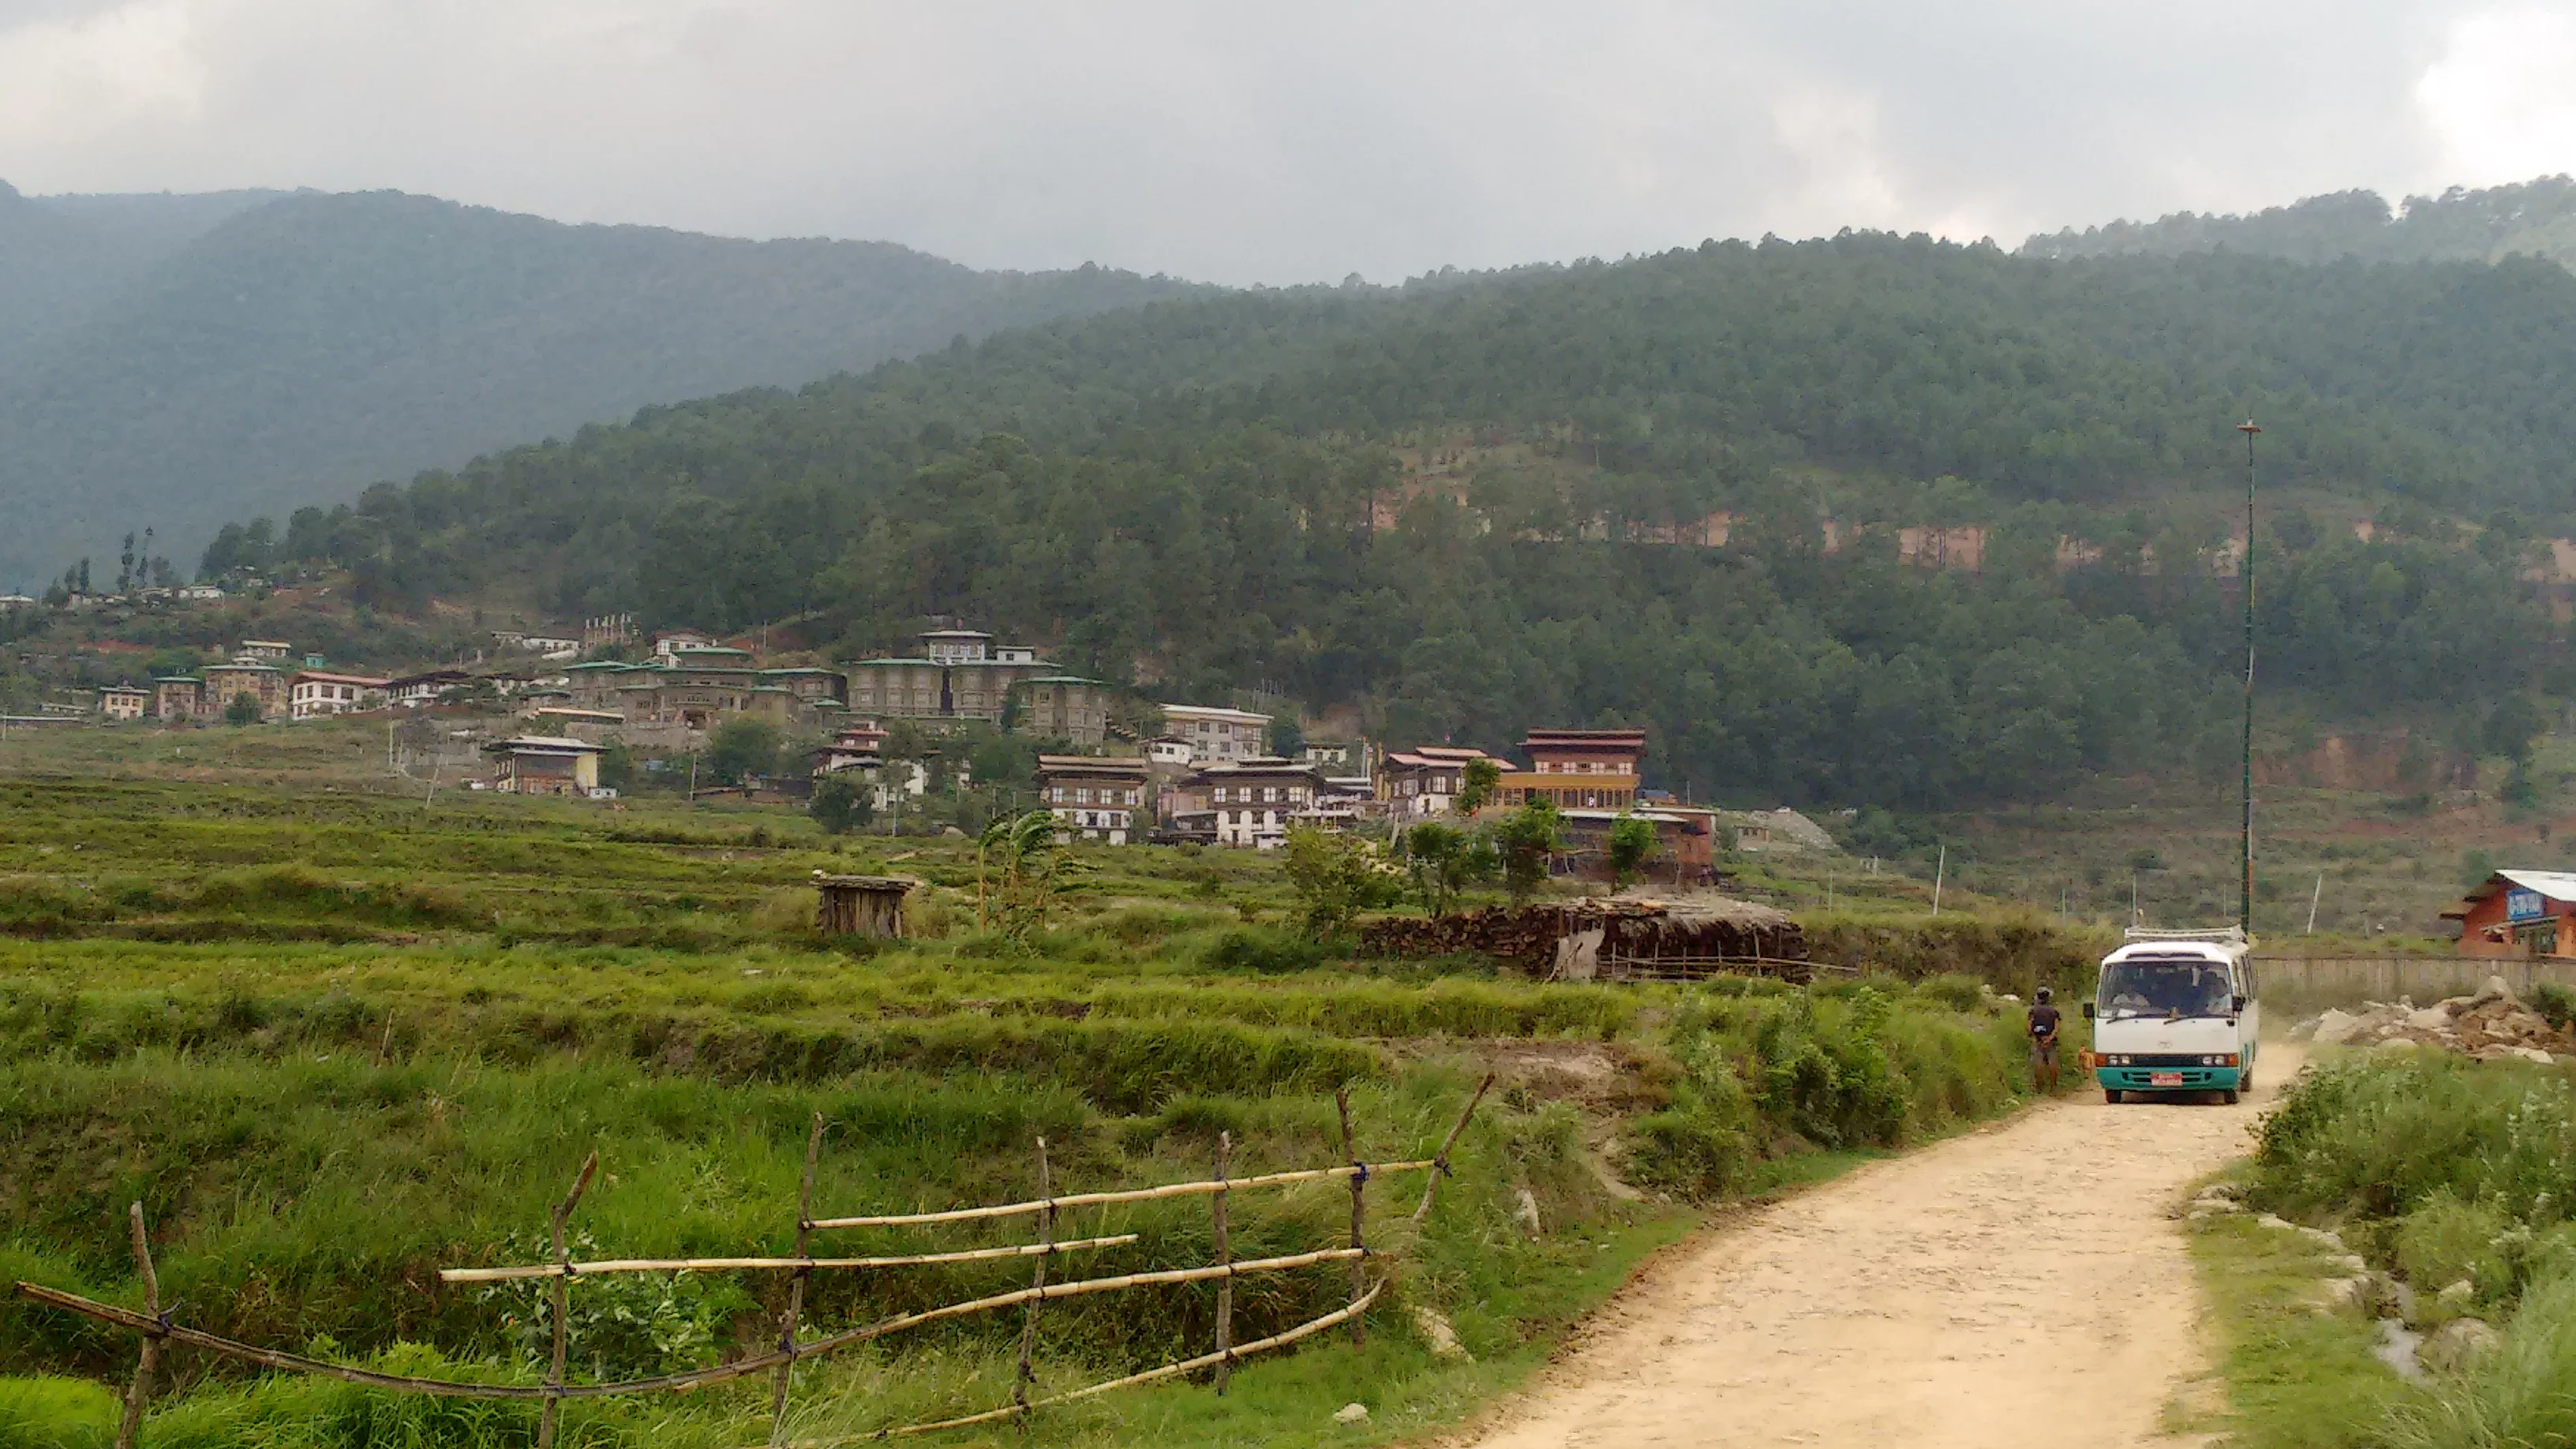 visiitng Bhutan